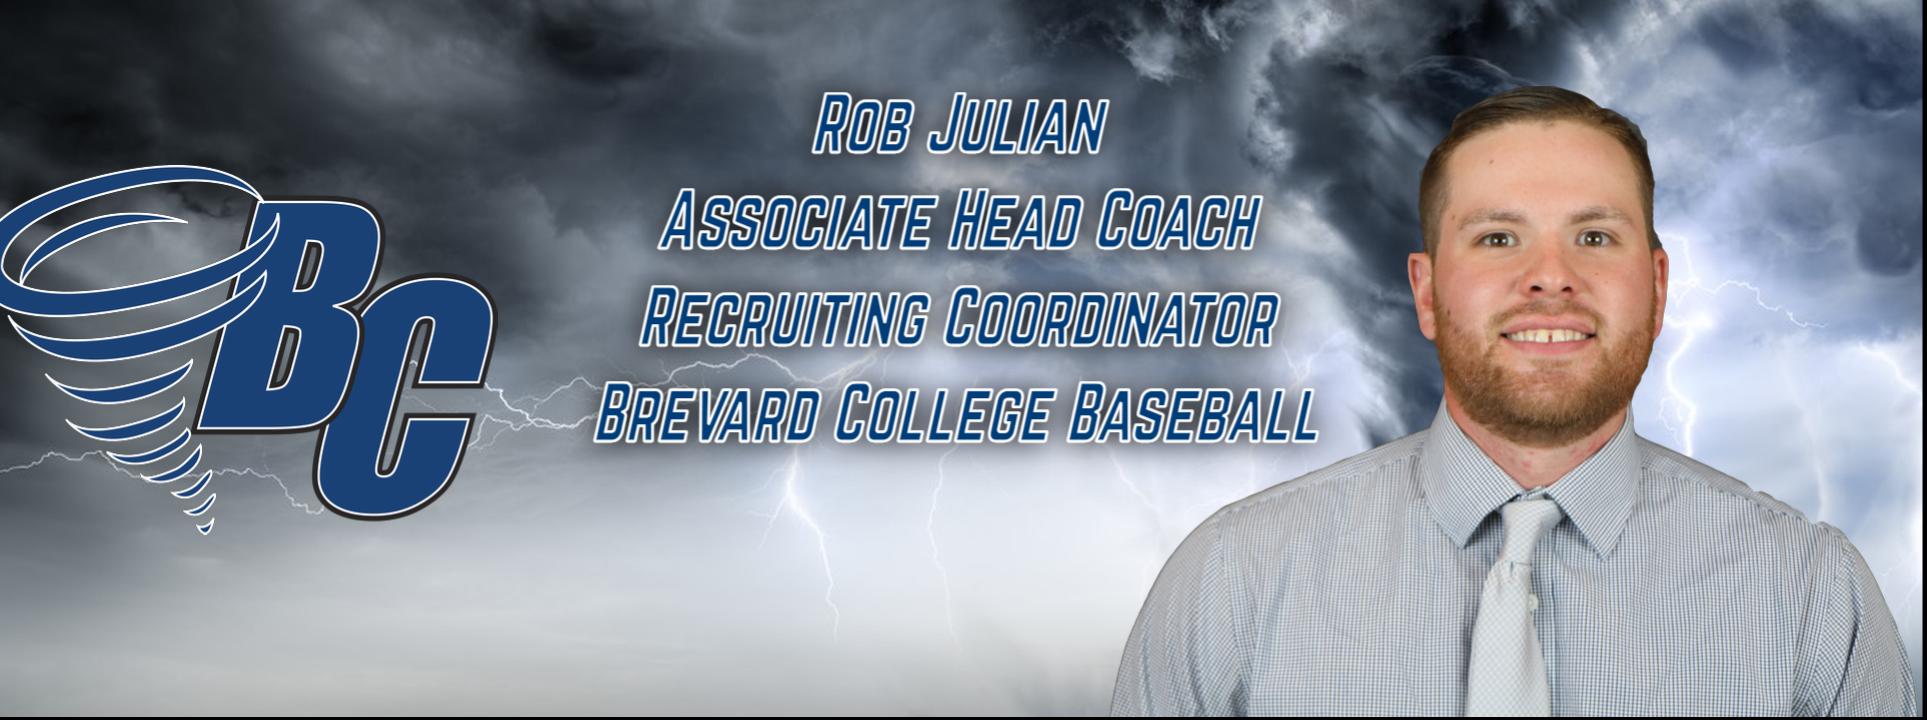 Julian Promoted to Associate Head Coach/Recruiting Coordinator for Brevard College Baseball